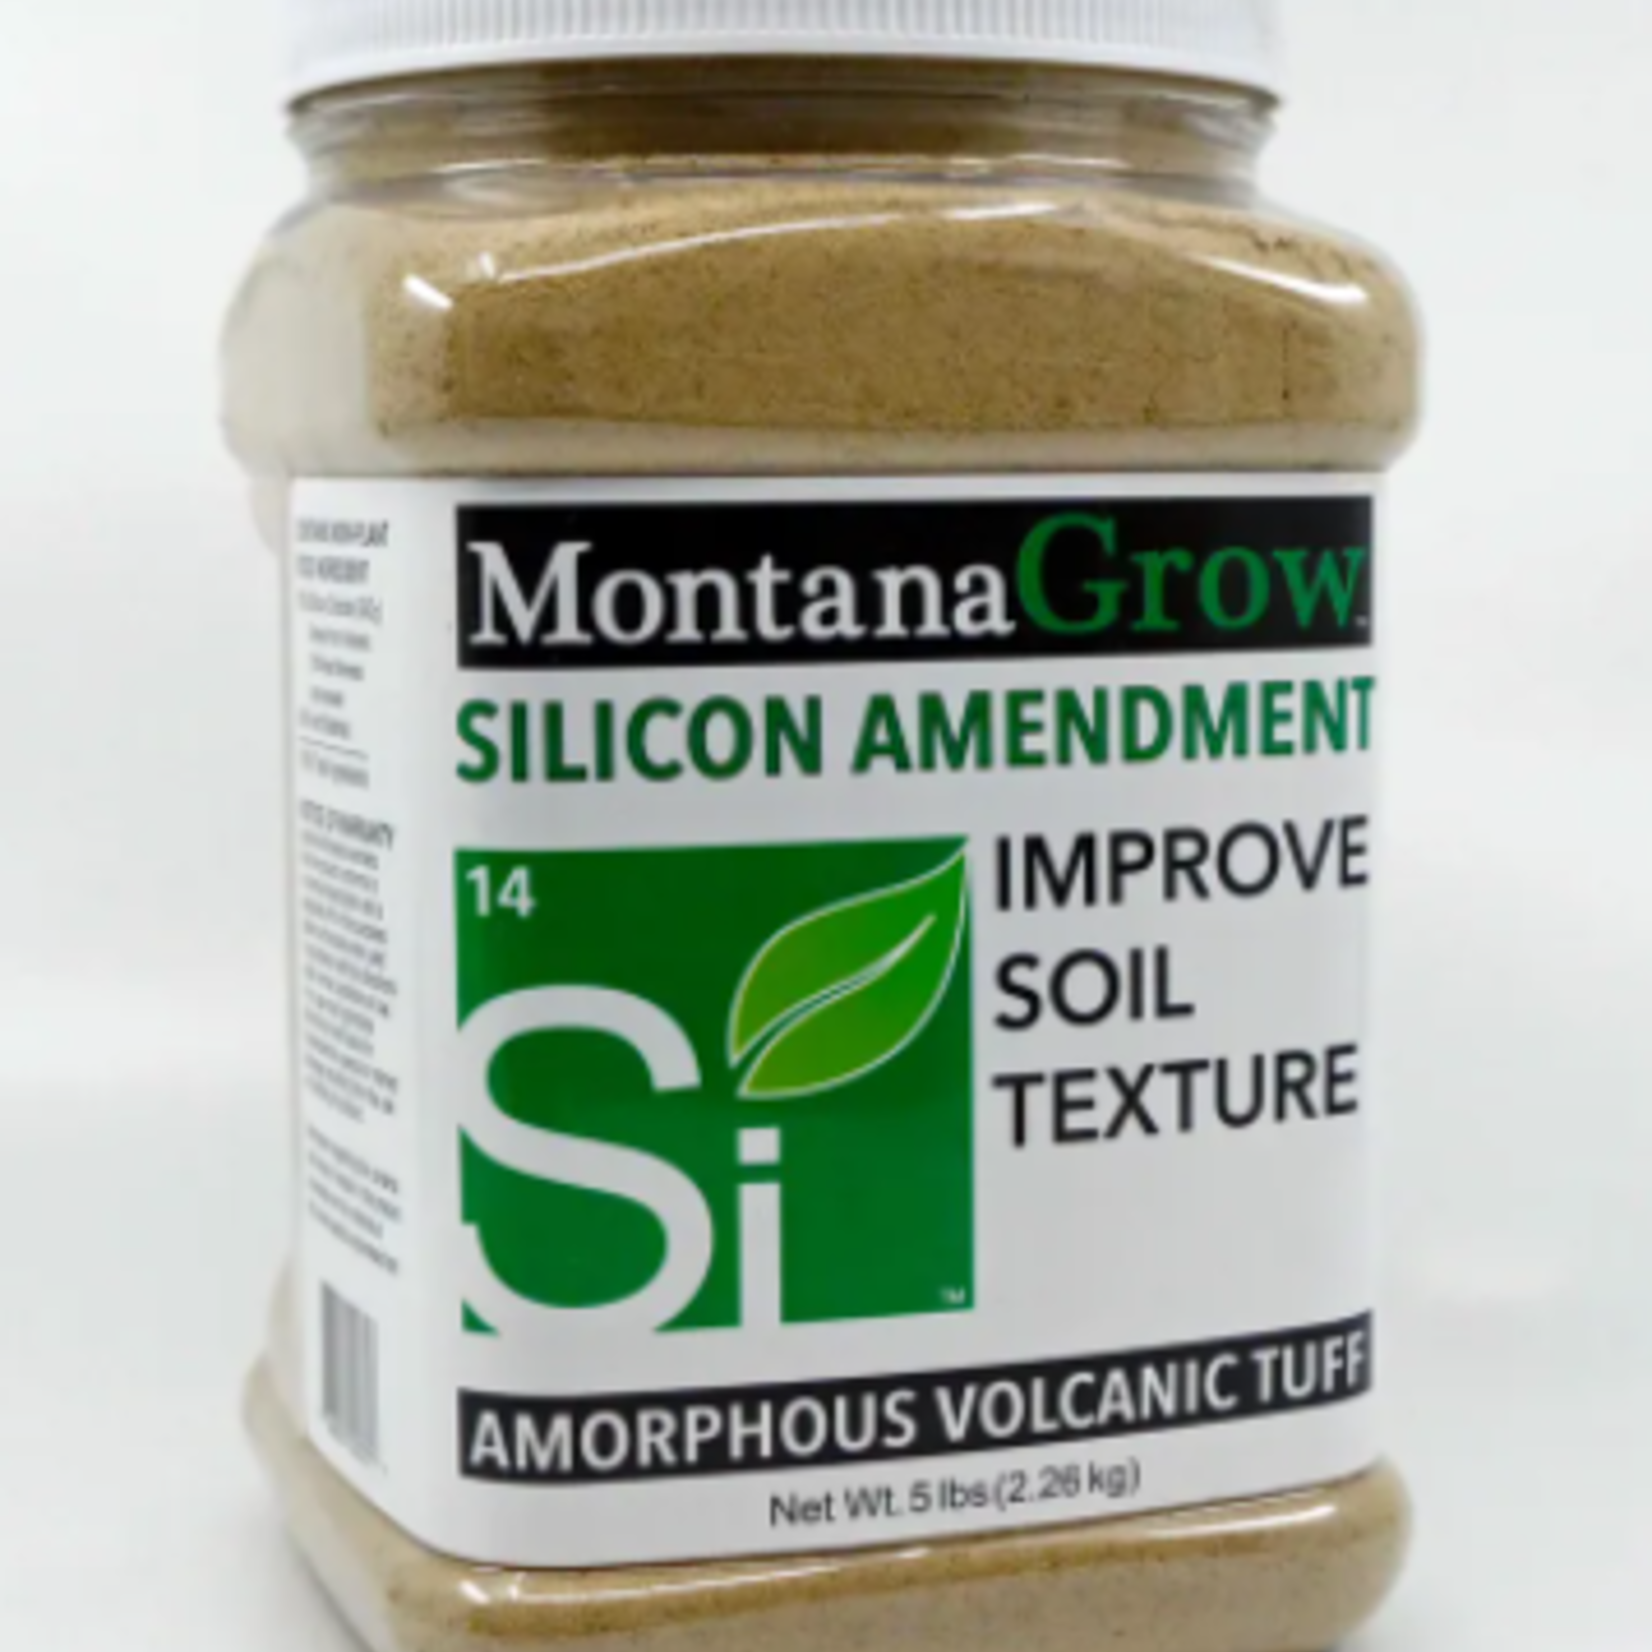 Montana Grow Montana Grow Powdered Silicon Amendment, 5 lb